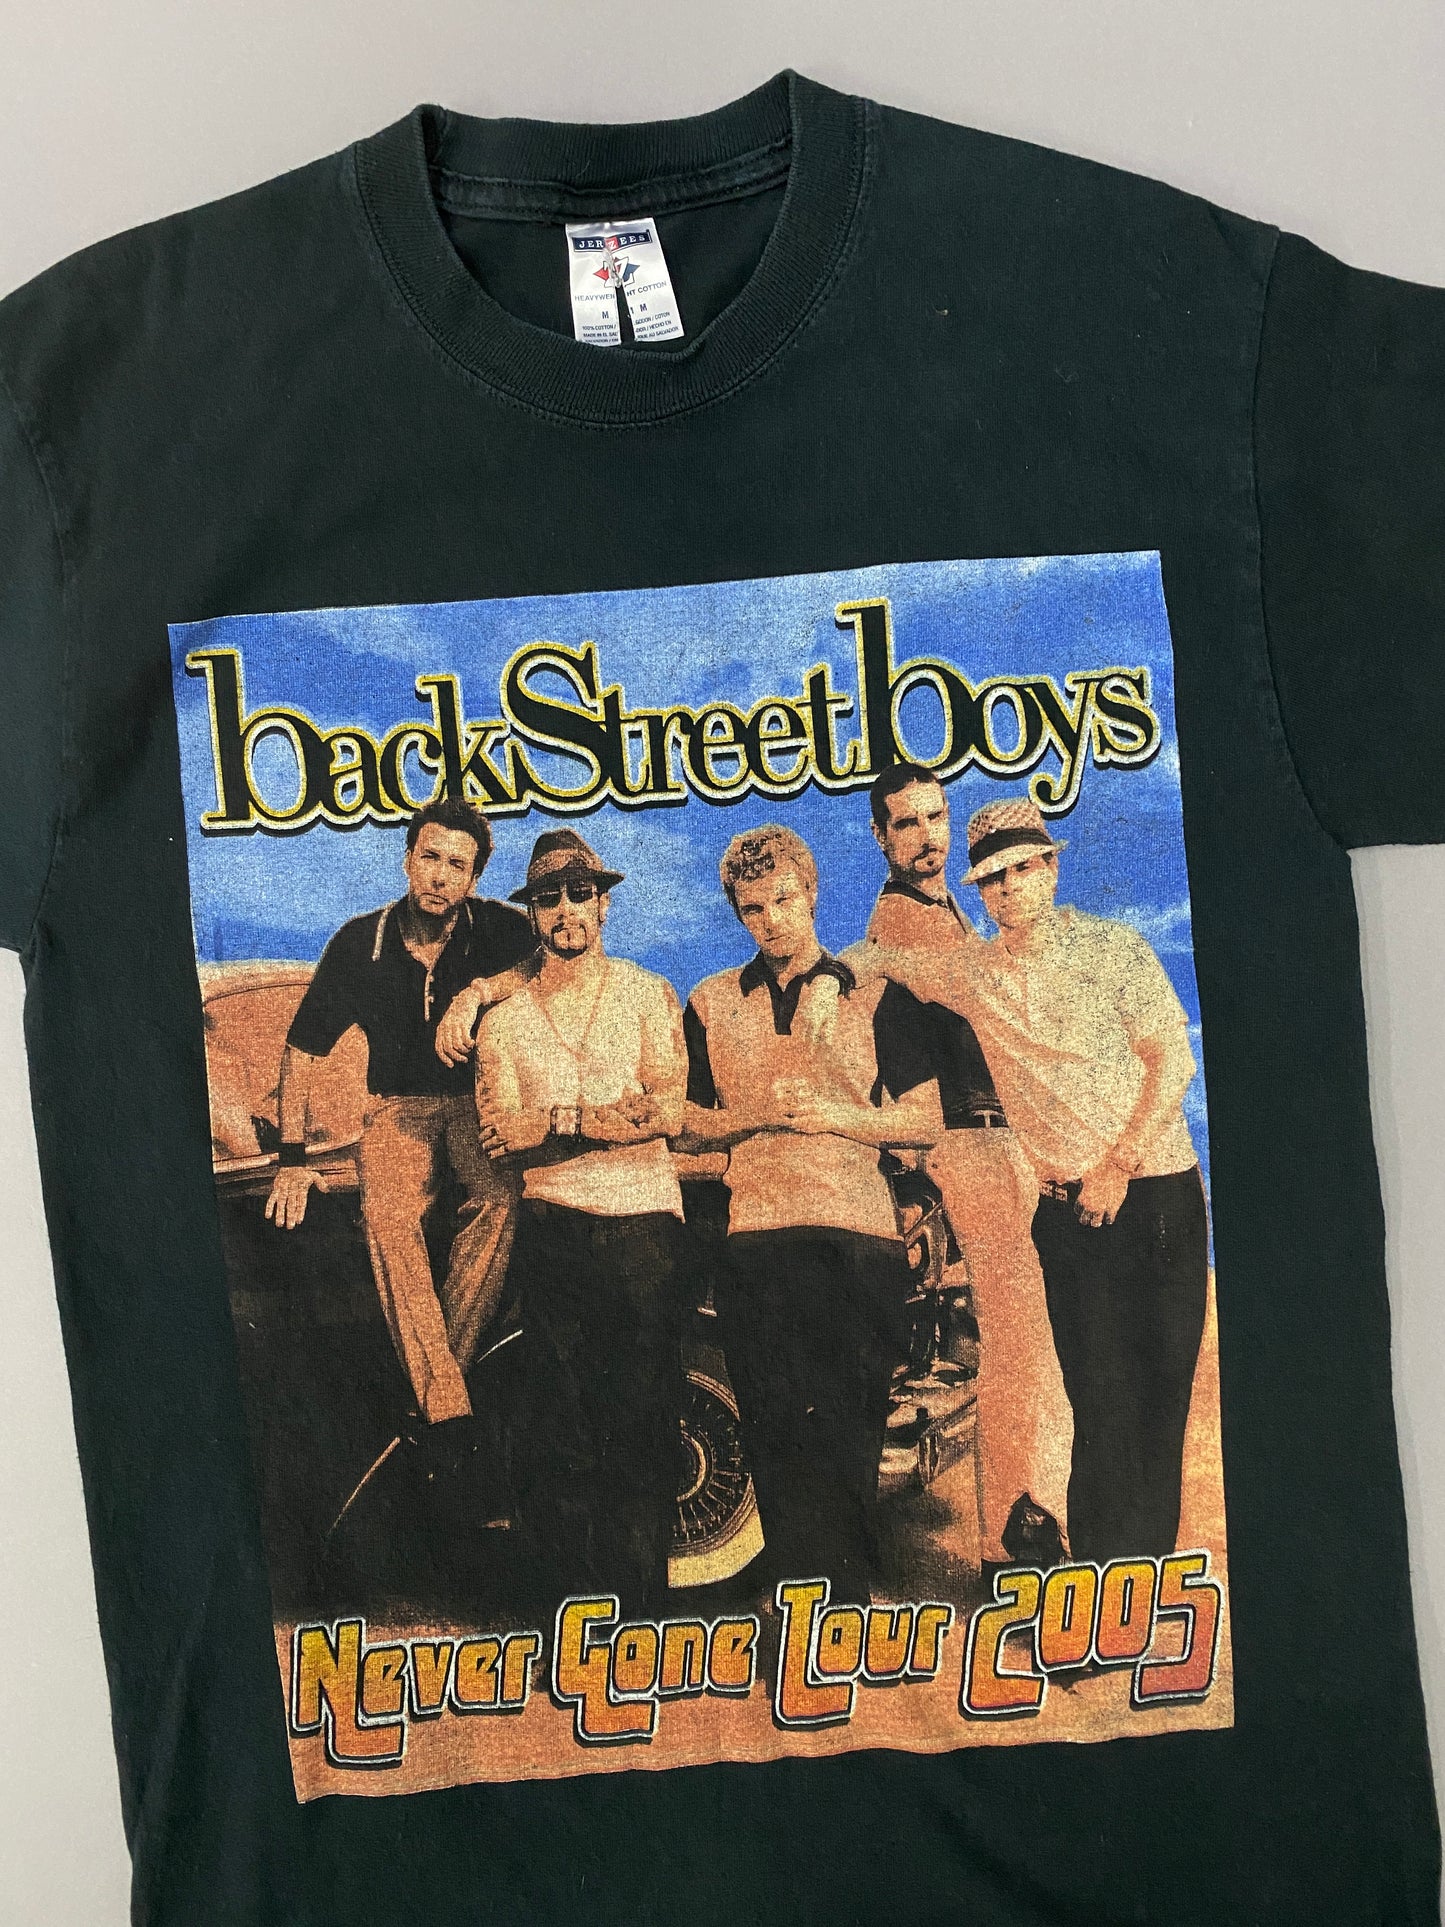 Backstreet Boys 2005 Tour T-Shirt